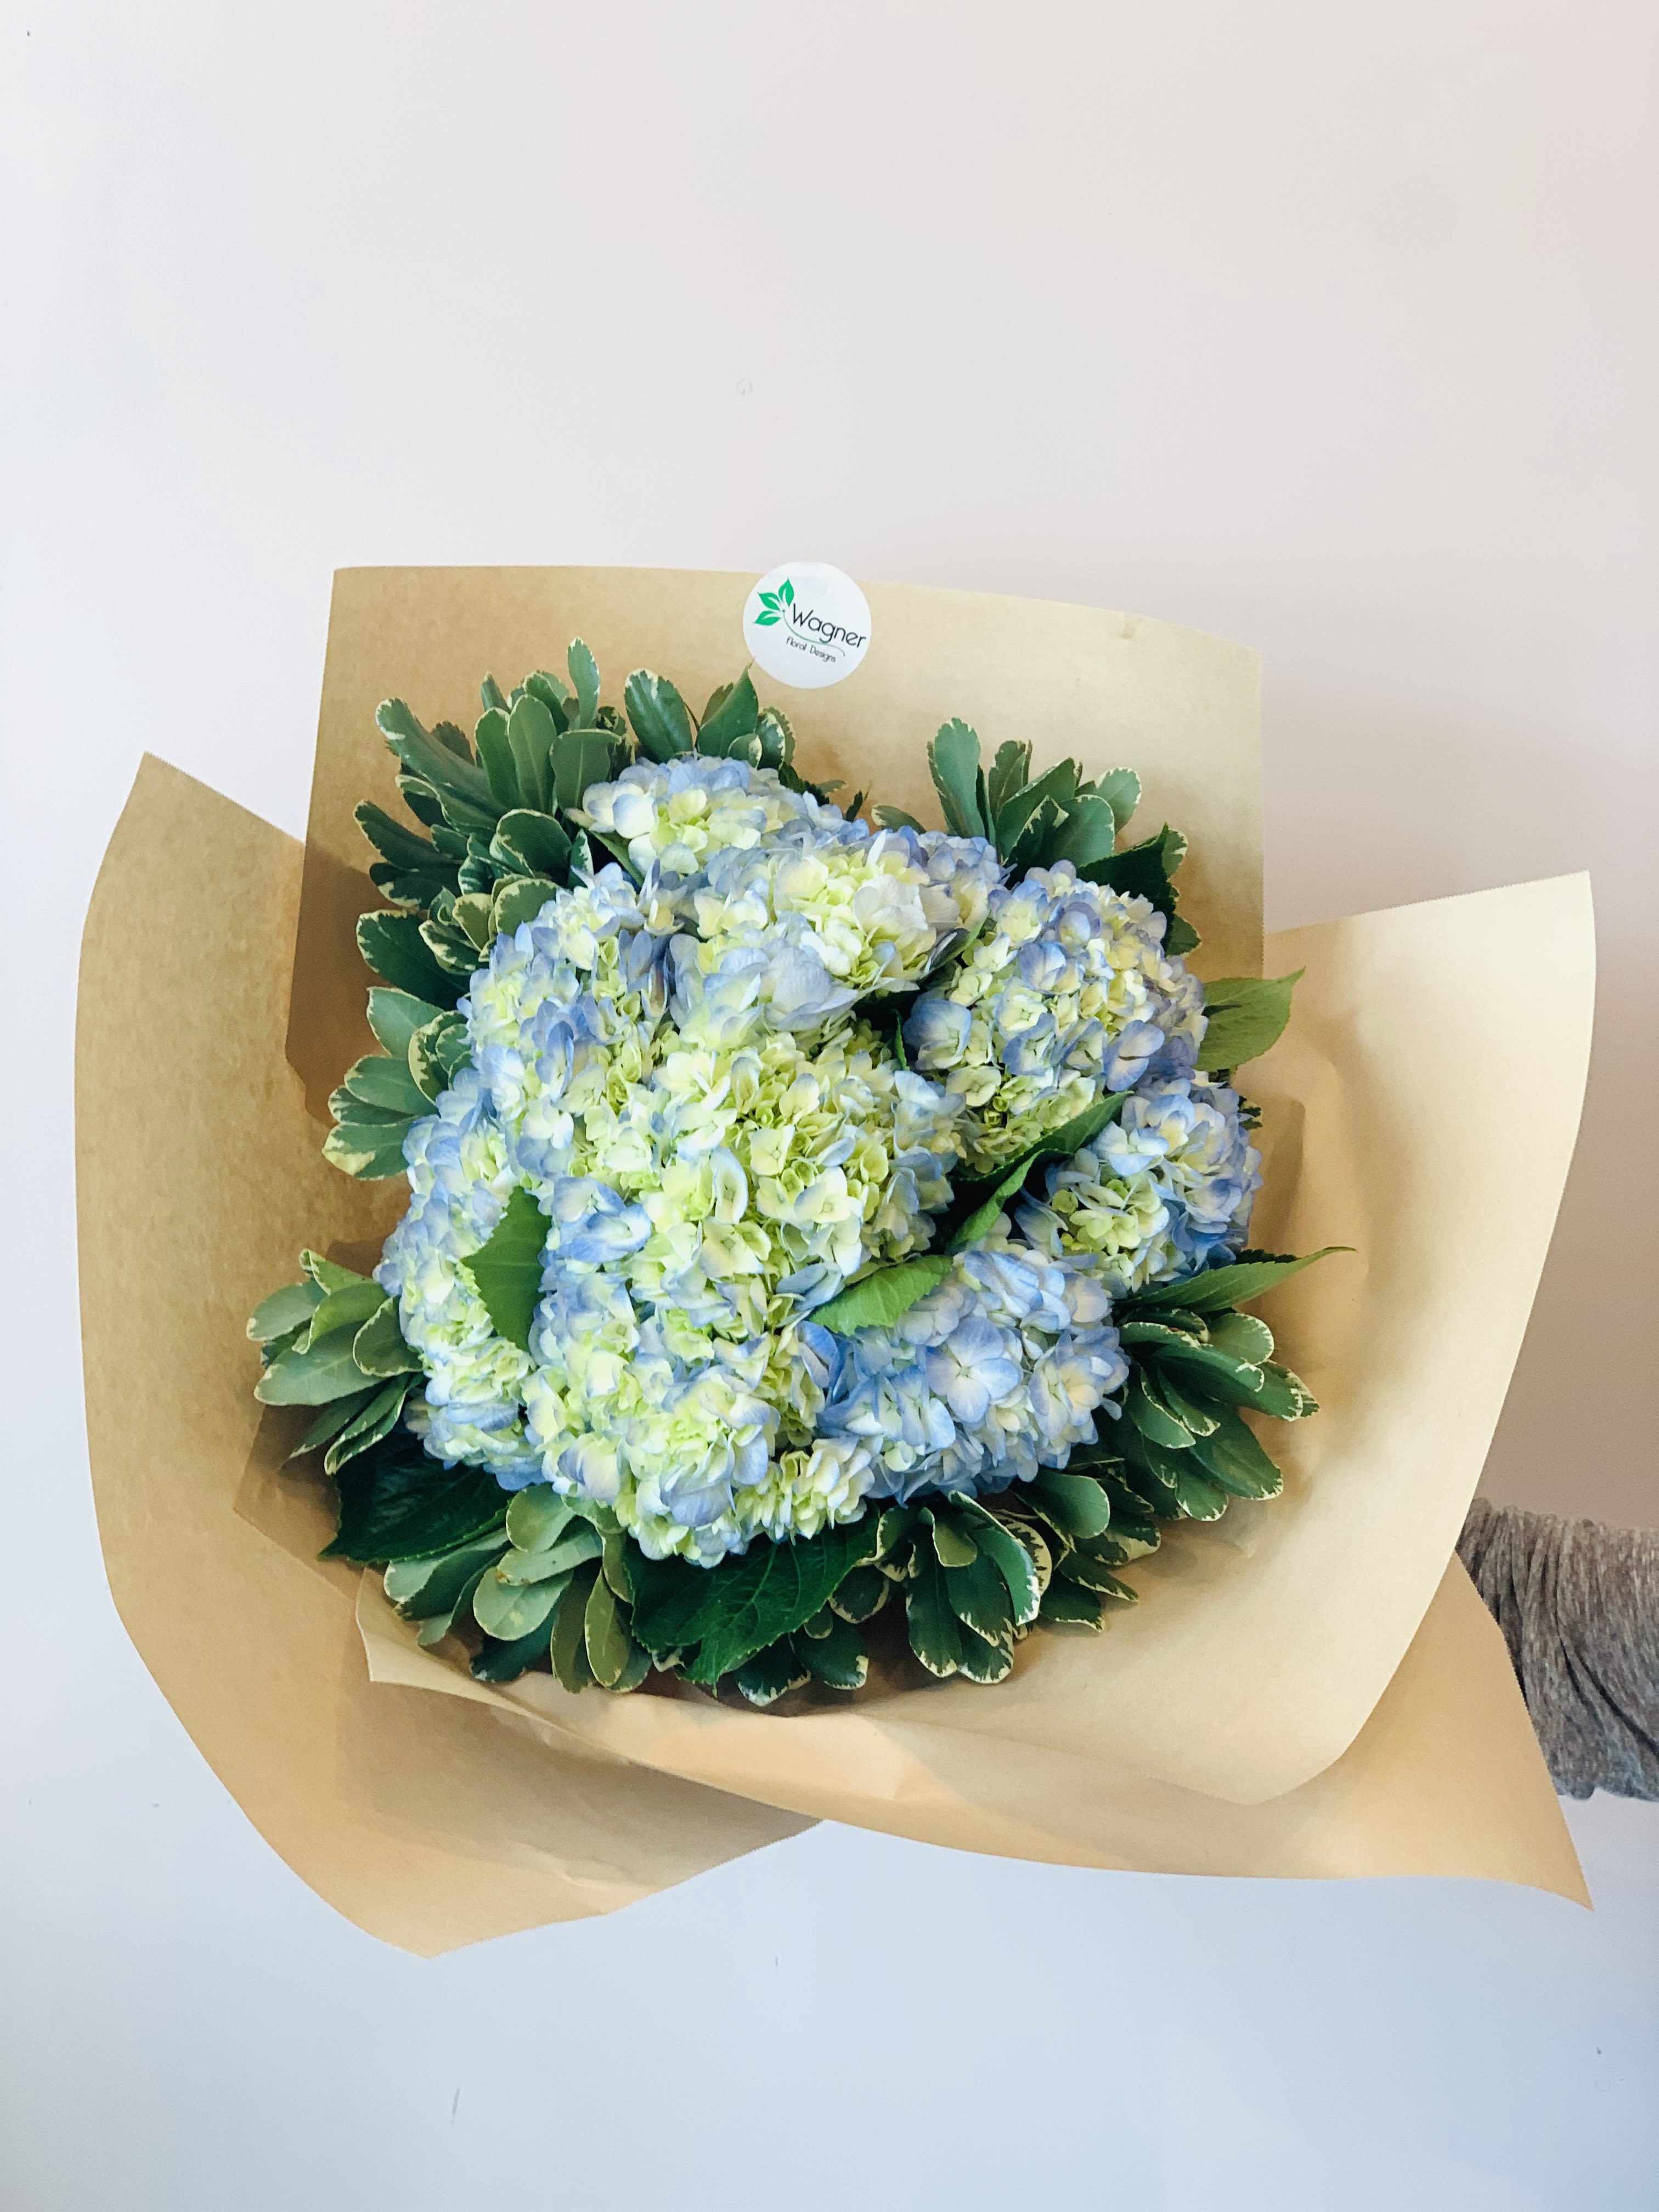 Blue Hydrangeas Bouquet In Somerville Ma Wagner Floral Designs,Small Bathroom Ideas Pinterest